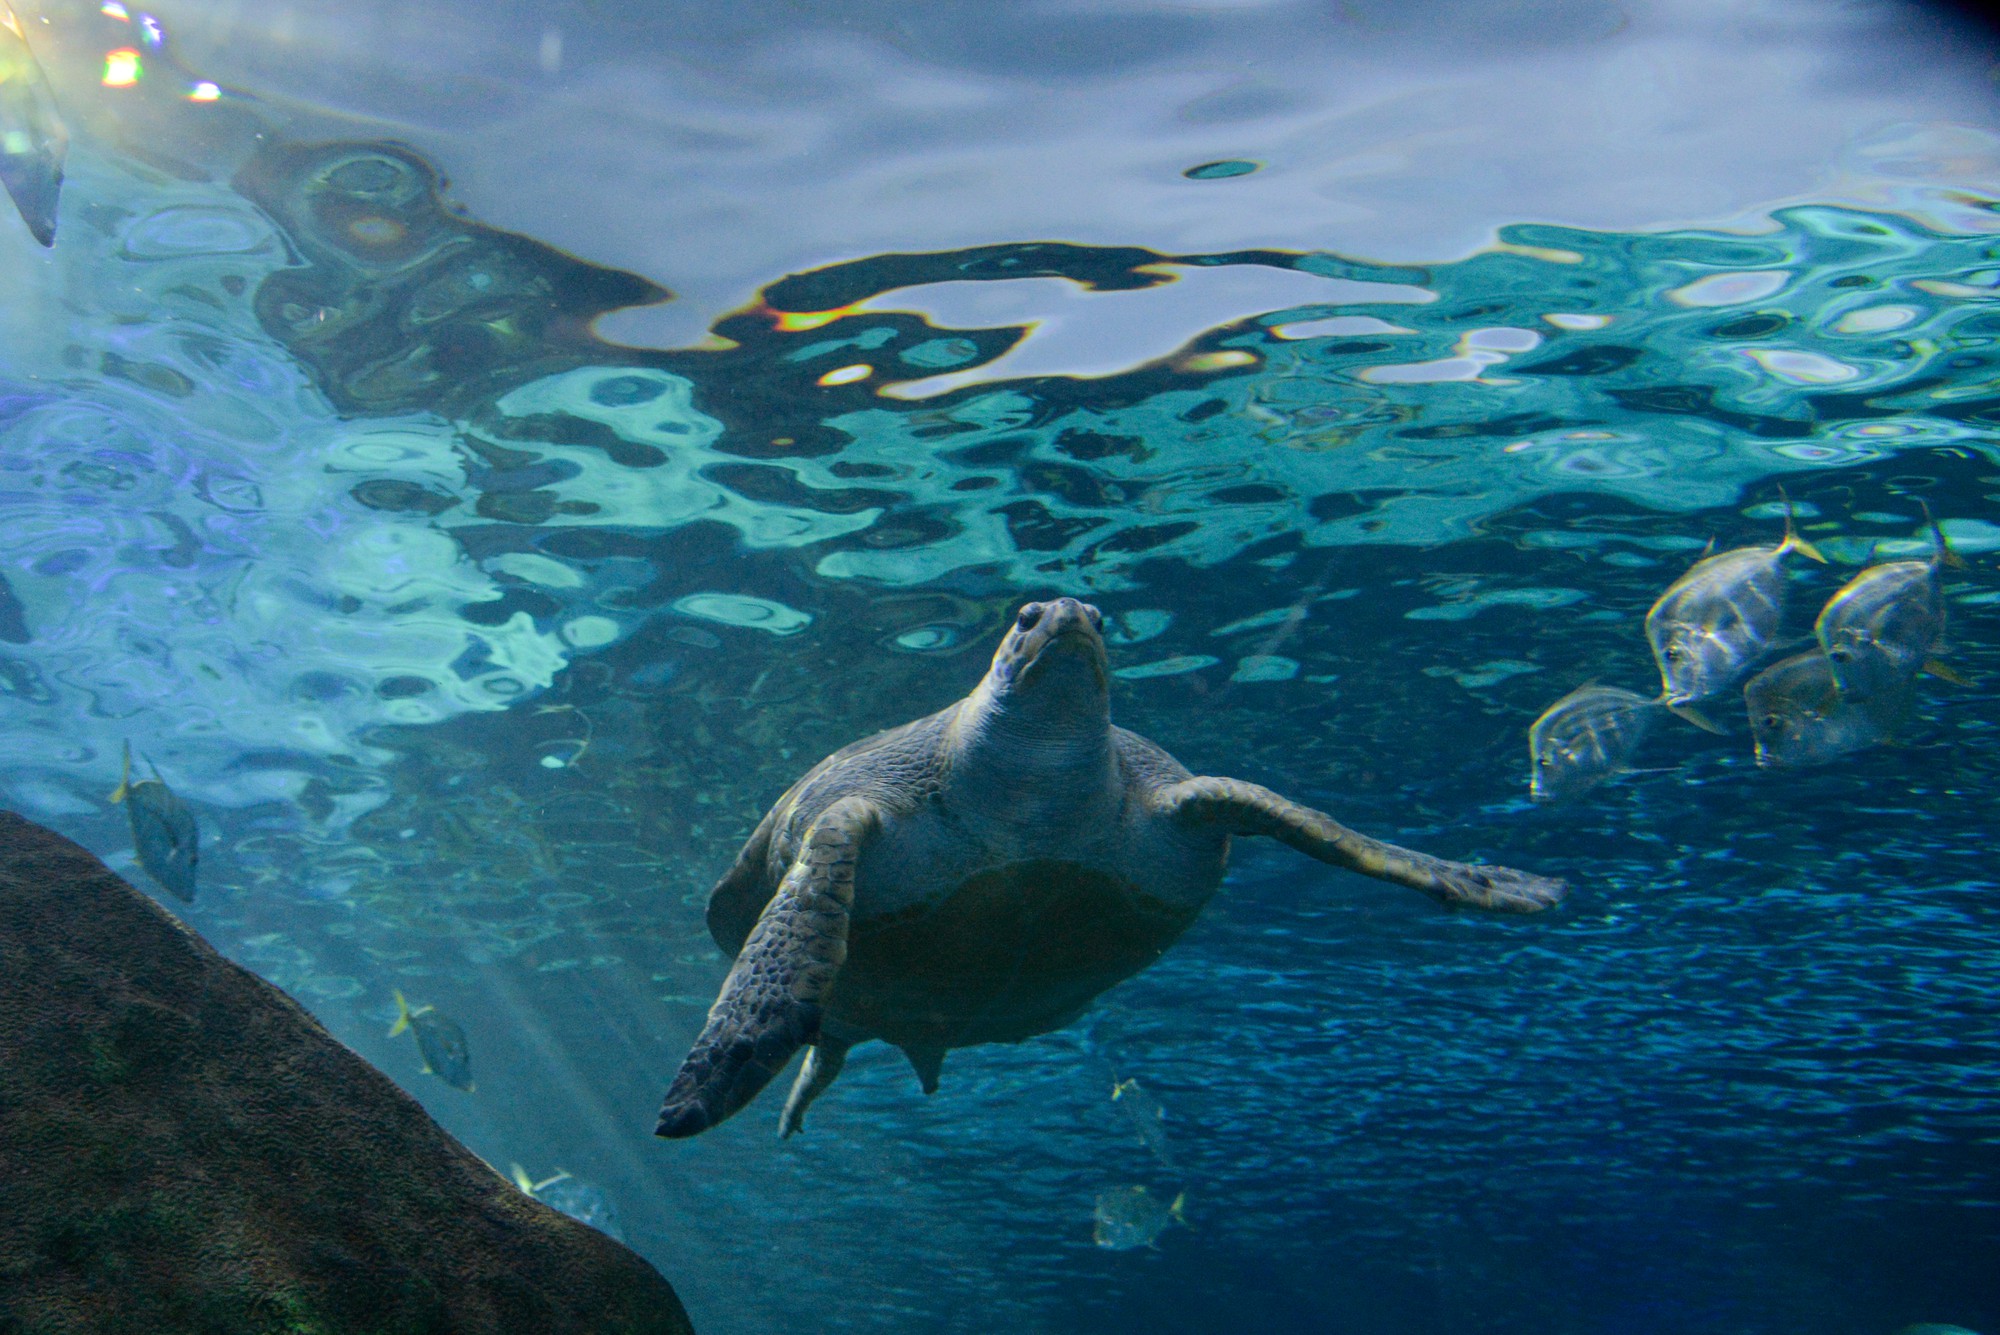 Ripley's Aquarium houses its third endangered green sea turtle